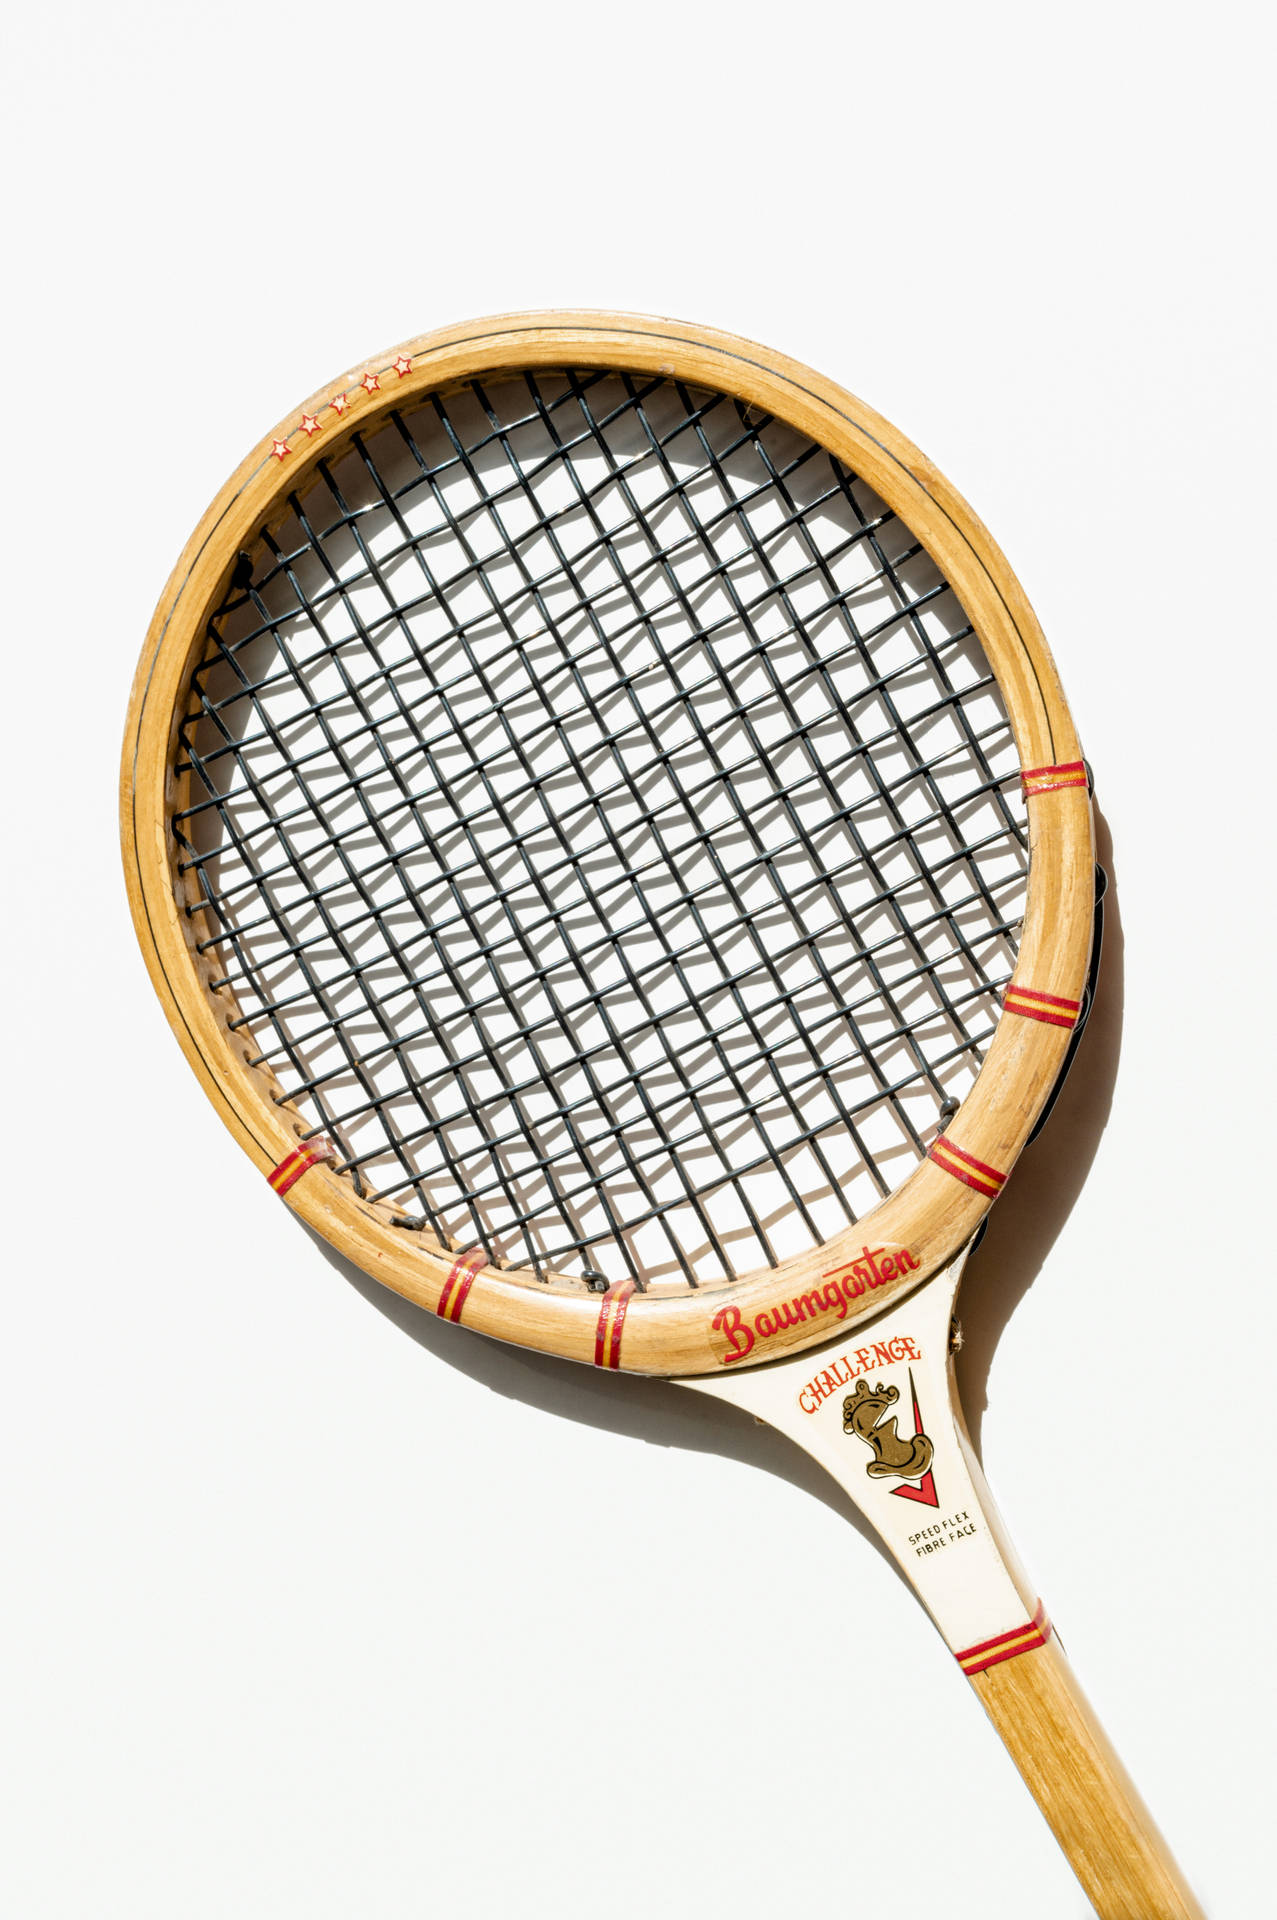 Baumgarten Squash Racket Background